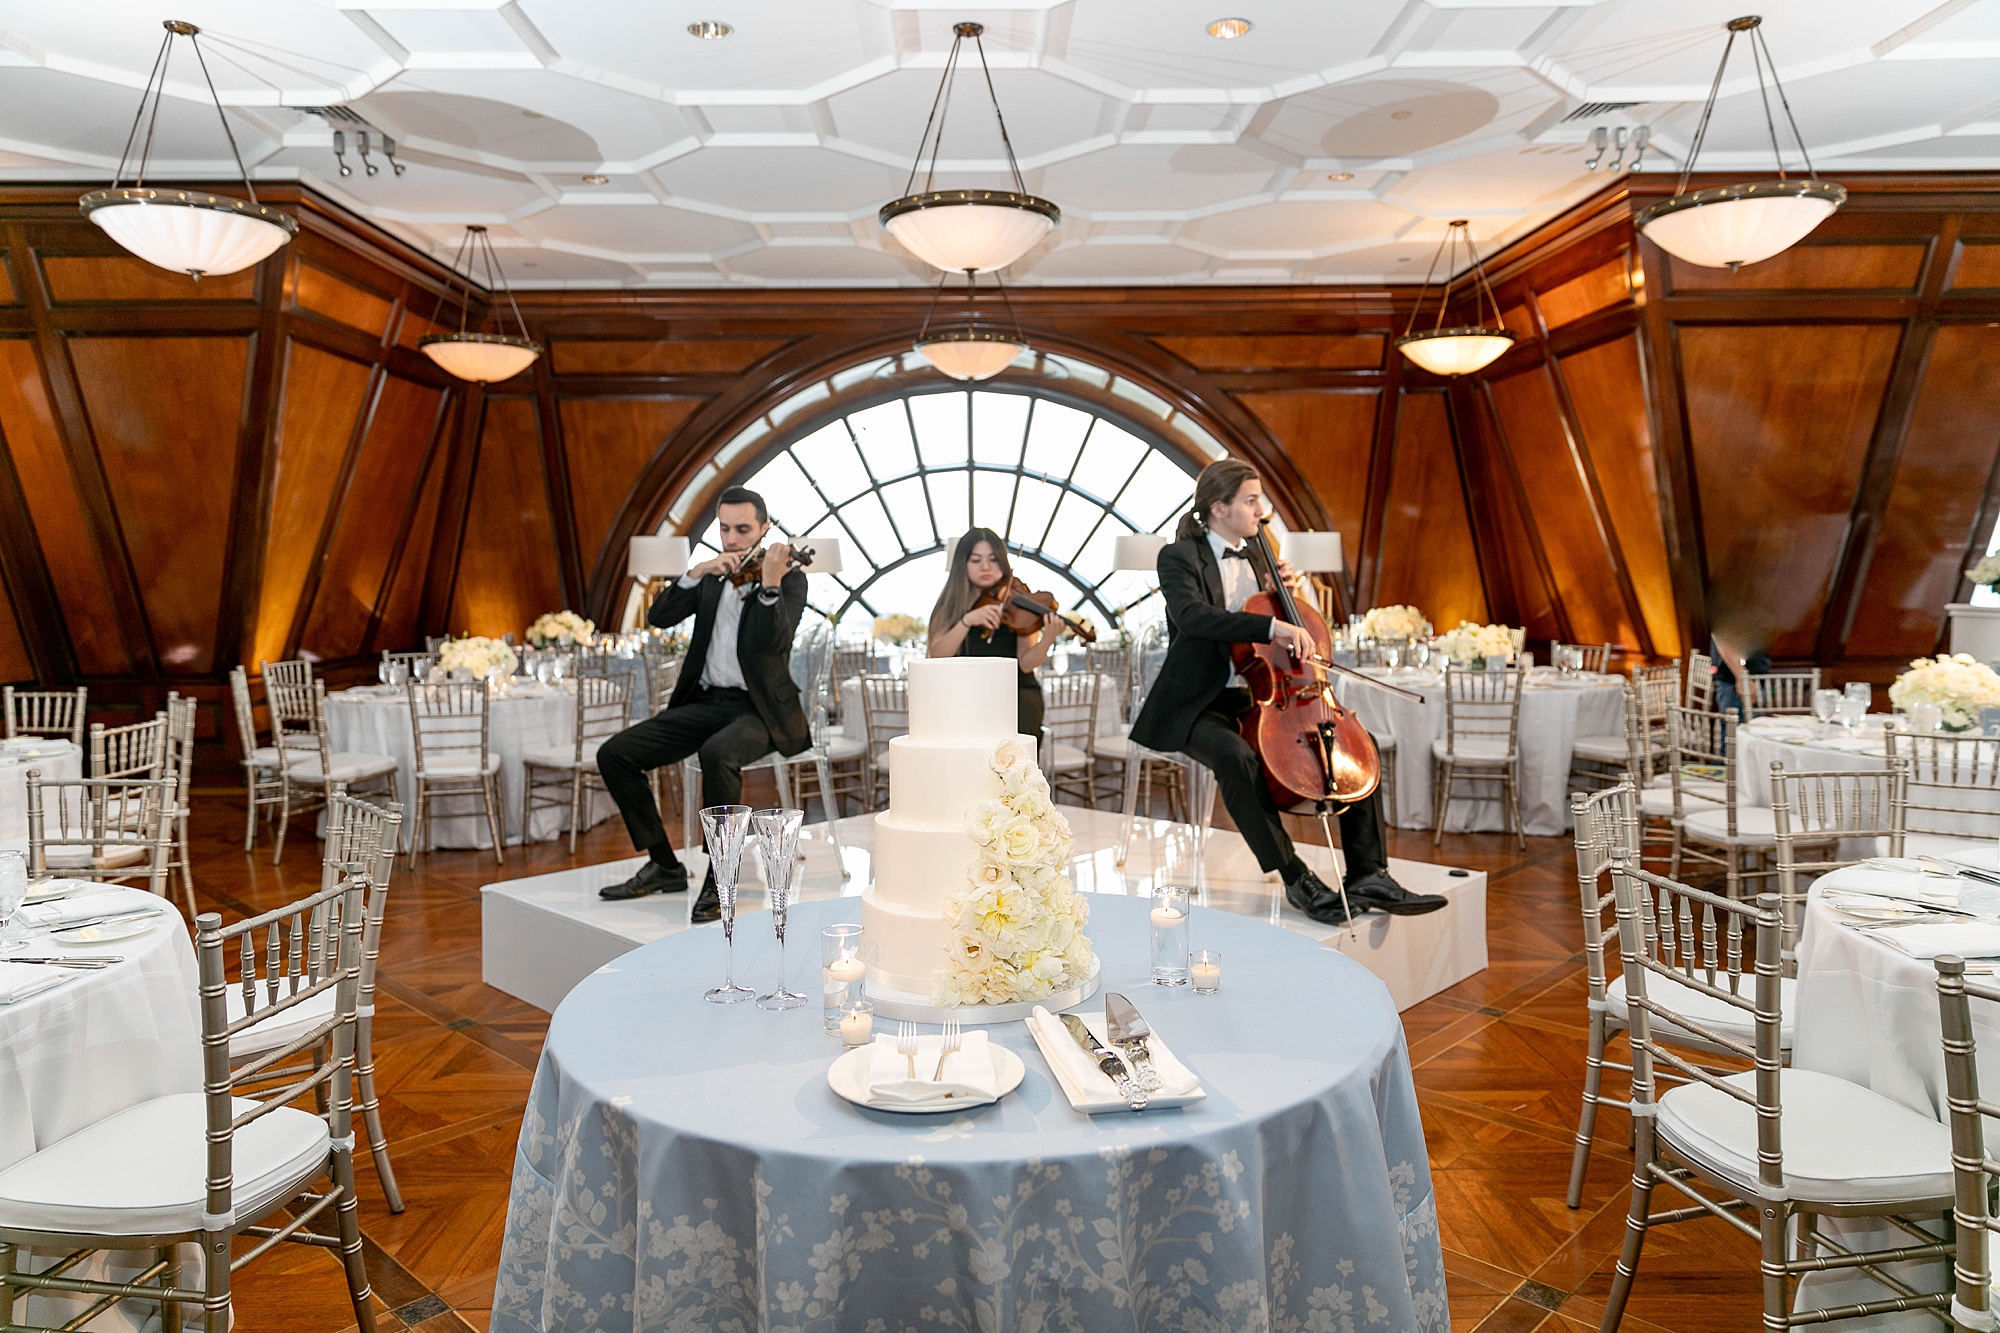 string trio plays inside the Crescent Club during wedding reception